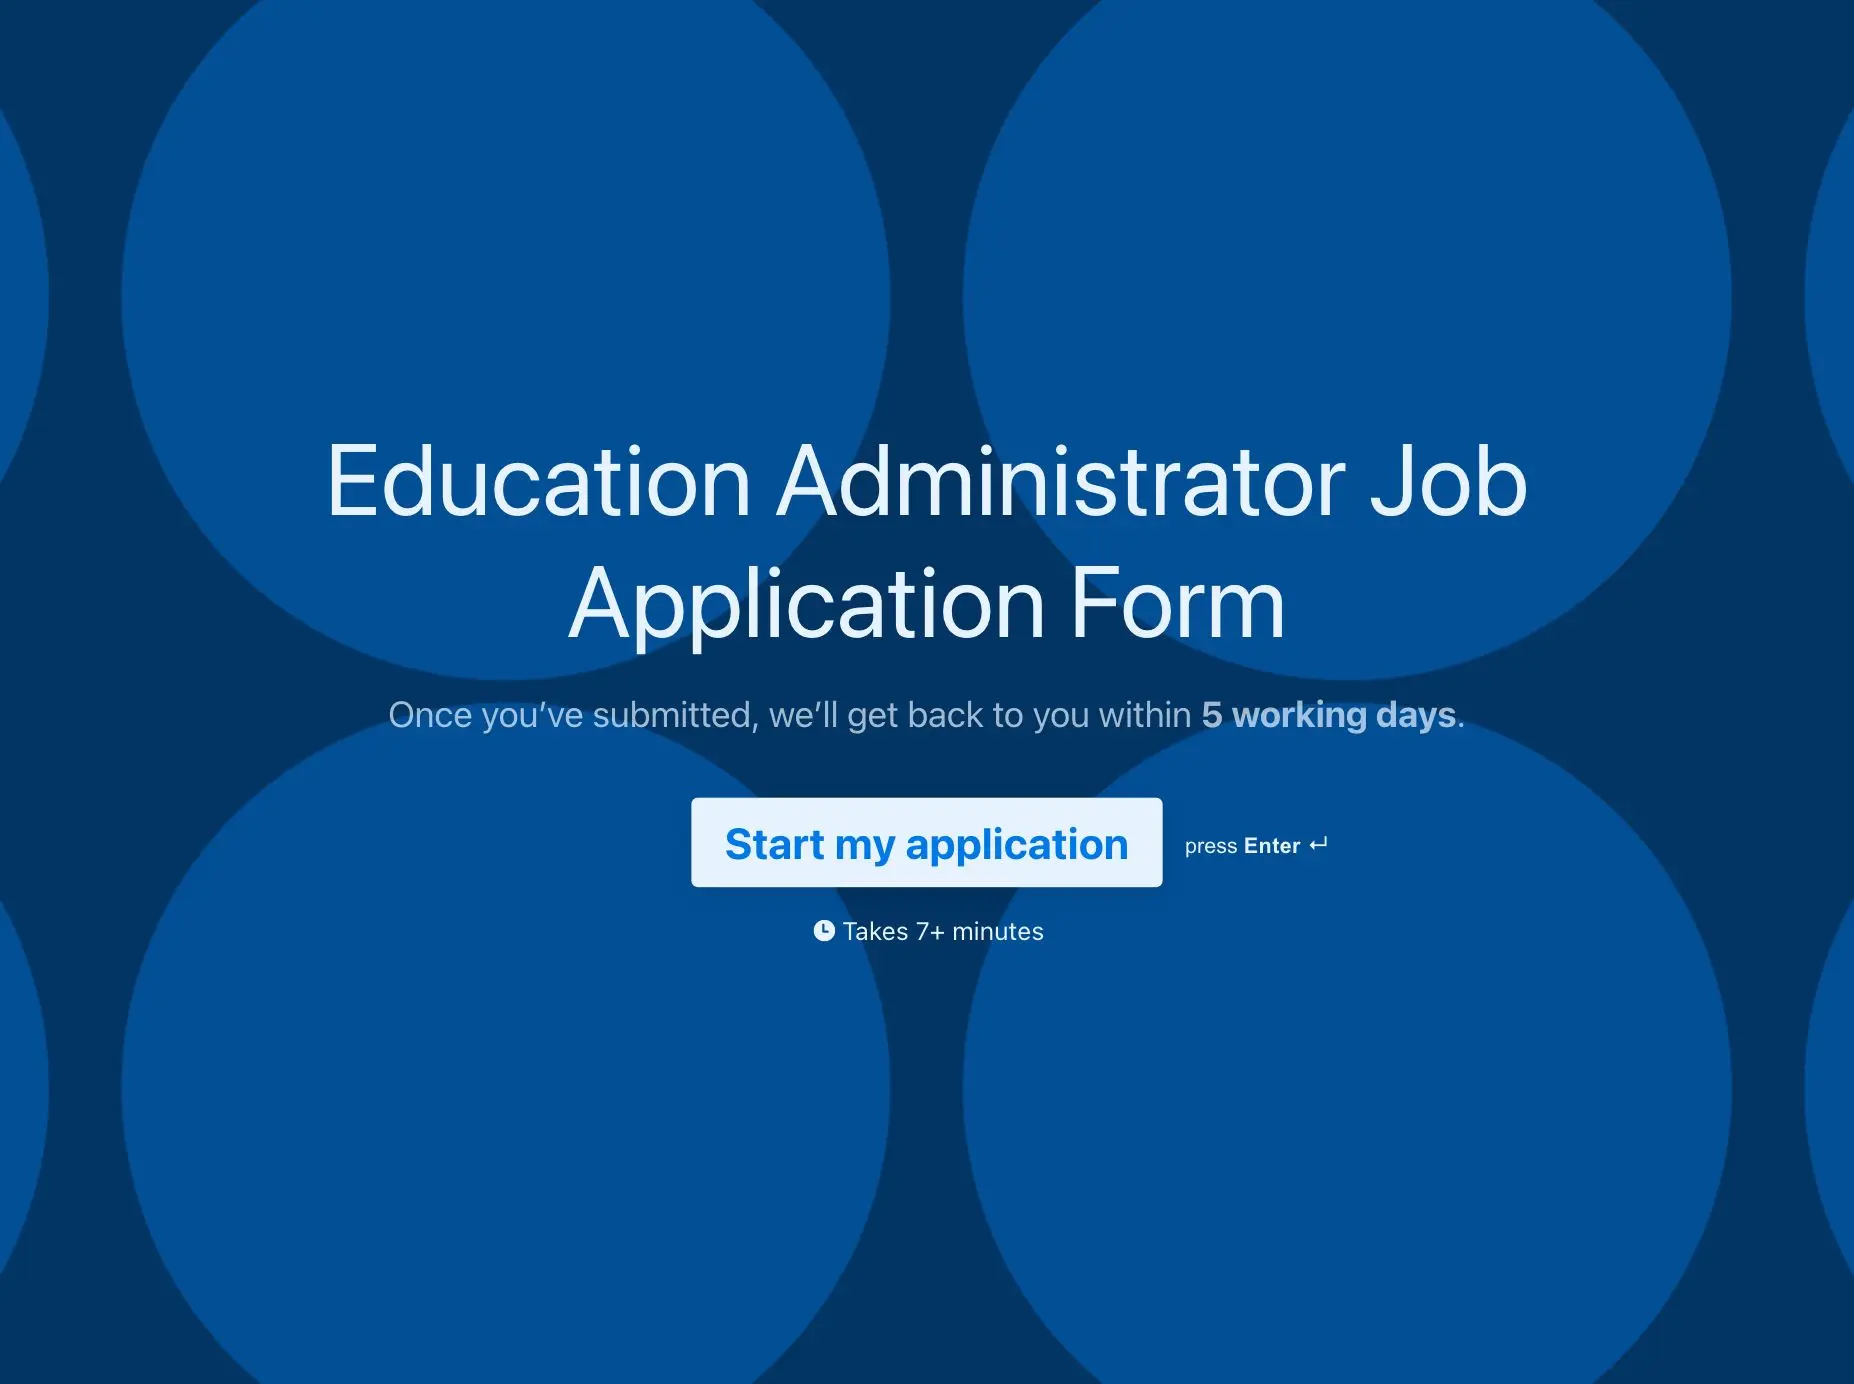 Education Administrator Job Application Form Template Hero